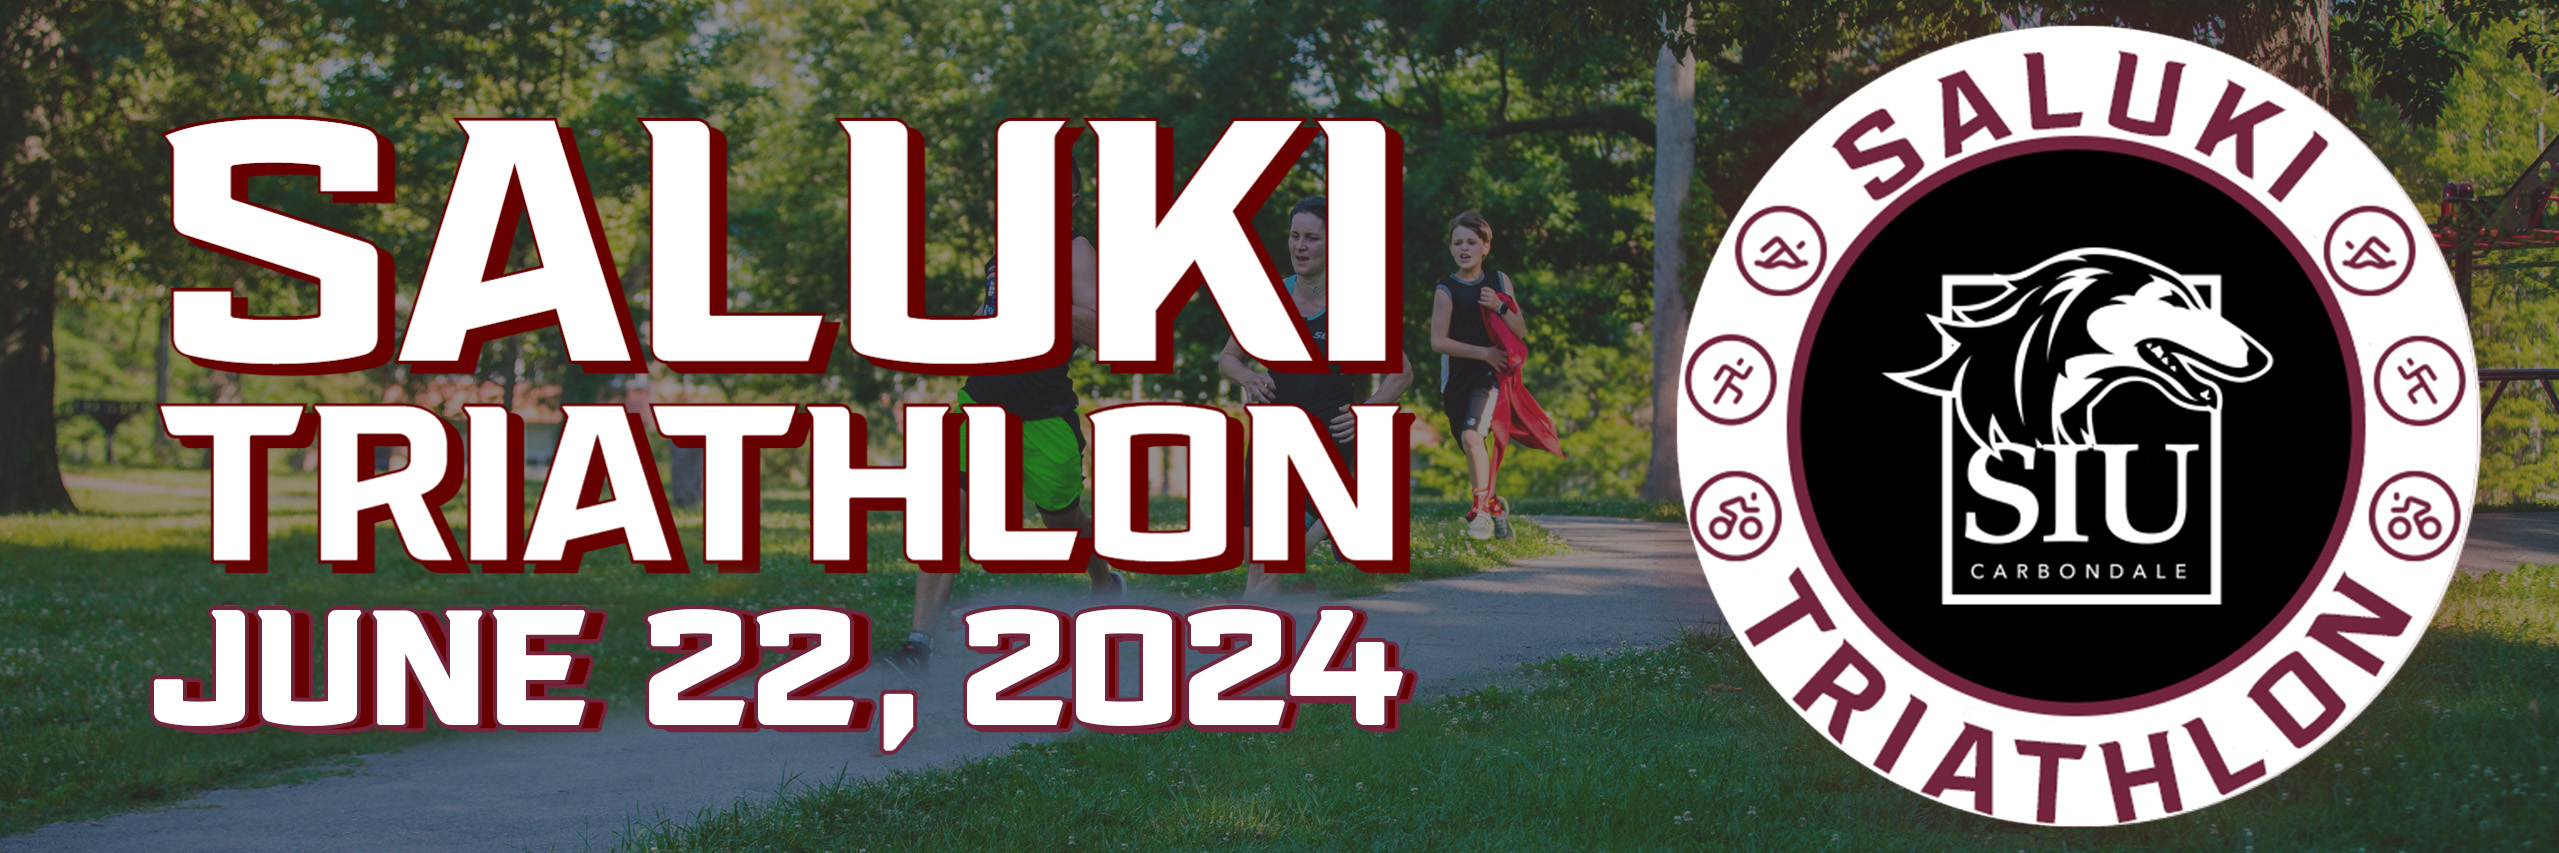 Saluki Triathlon June 22, 2024